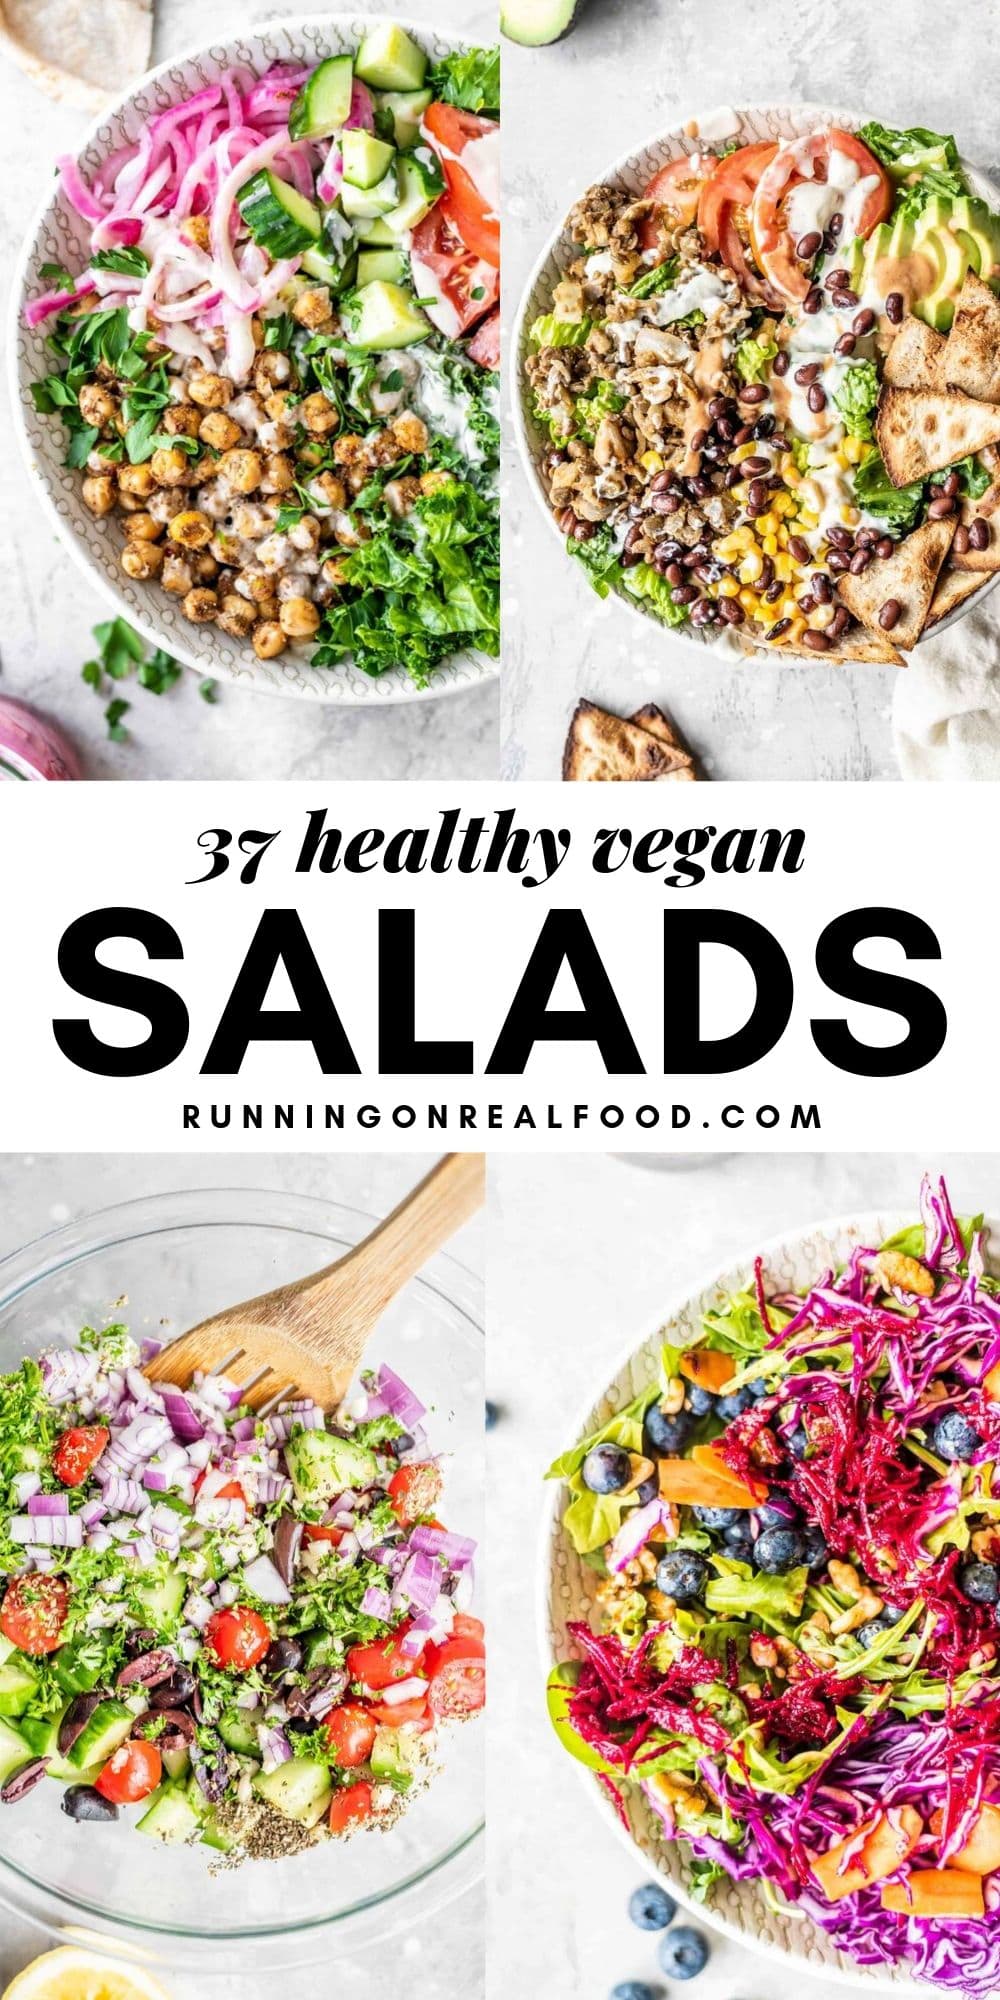 37 Satisfying Healthy Vegan Salad Recipes - Running on Real Food